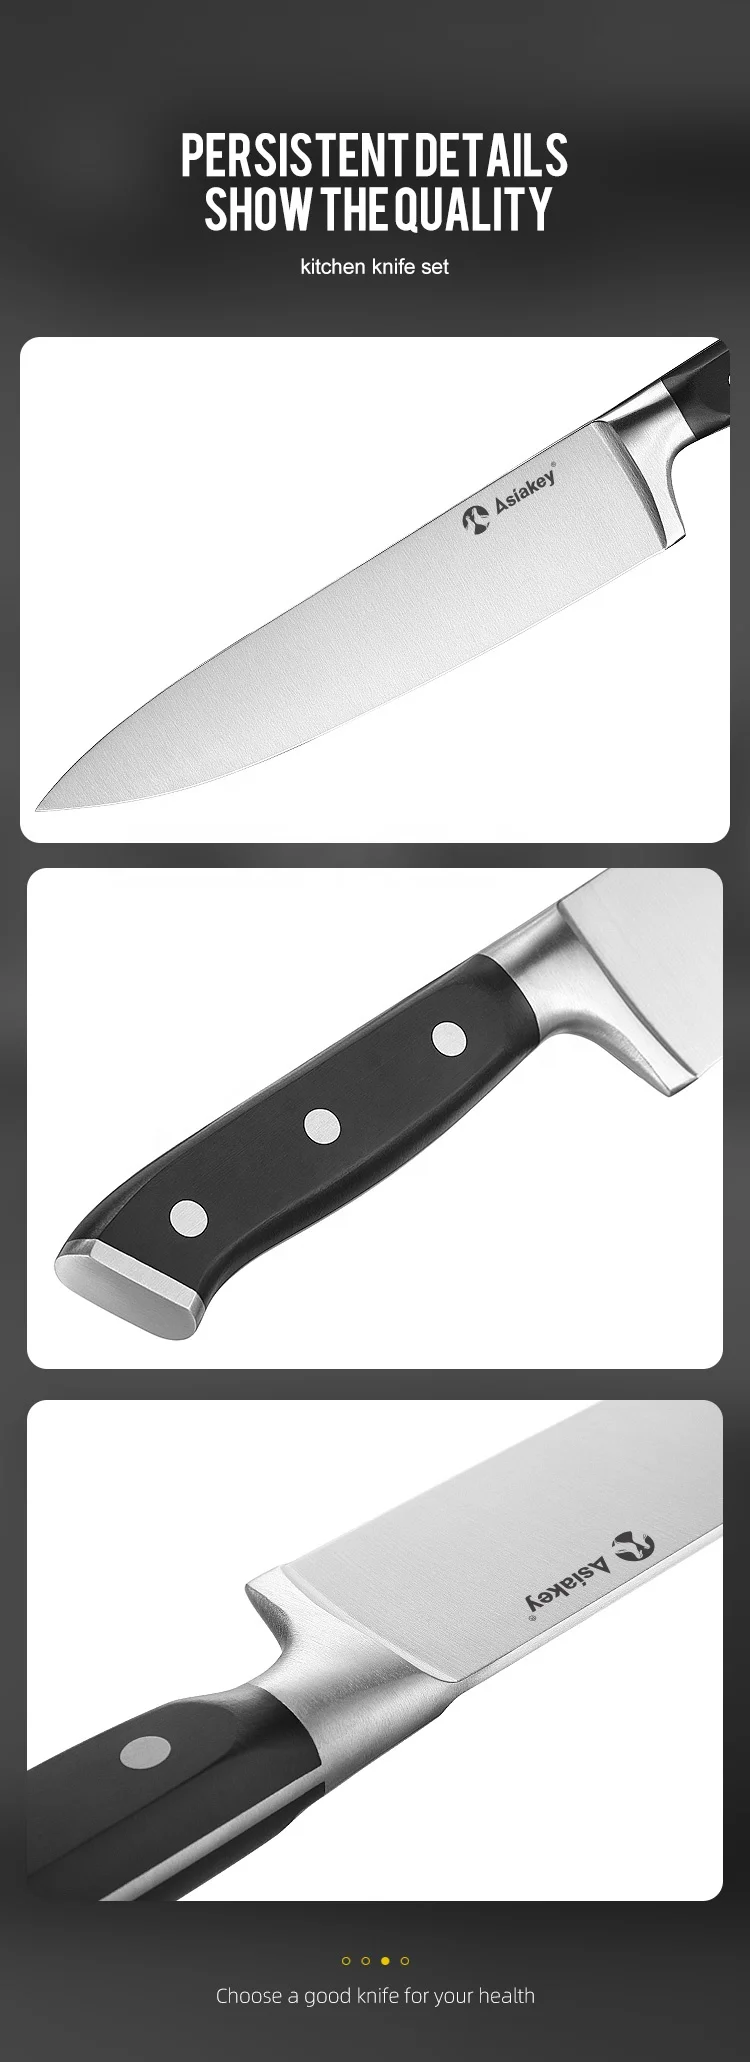 Equipamiento de cocina: guía de 8 cuchillos indispensables